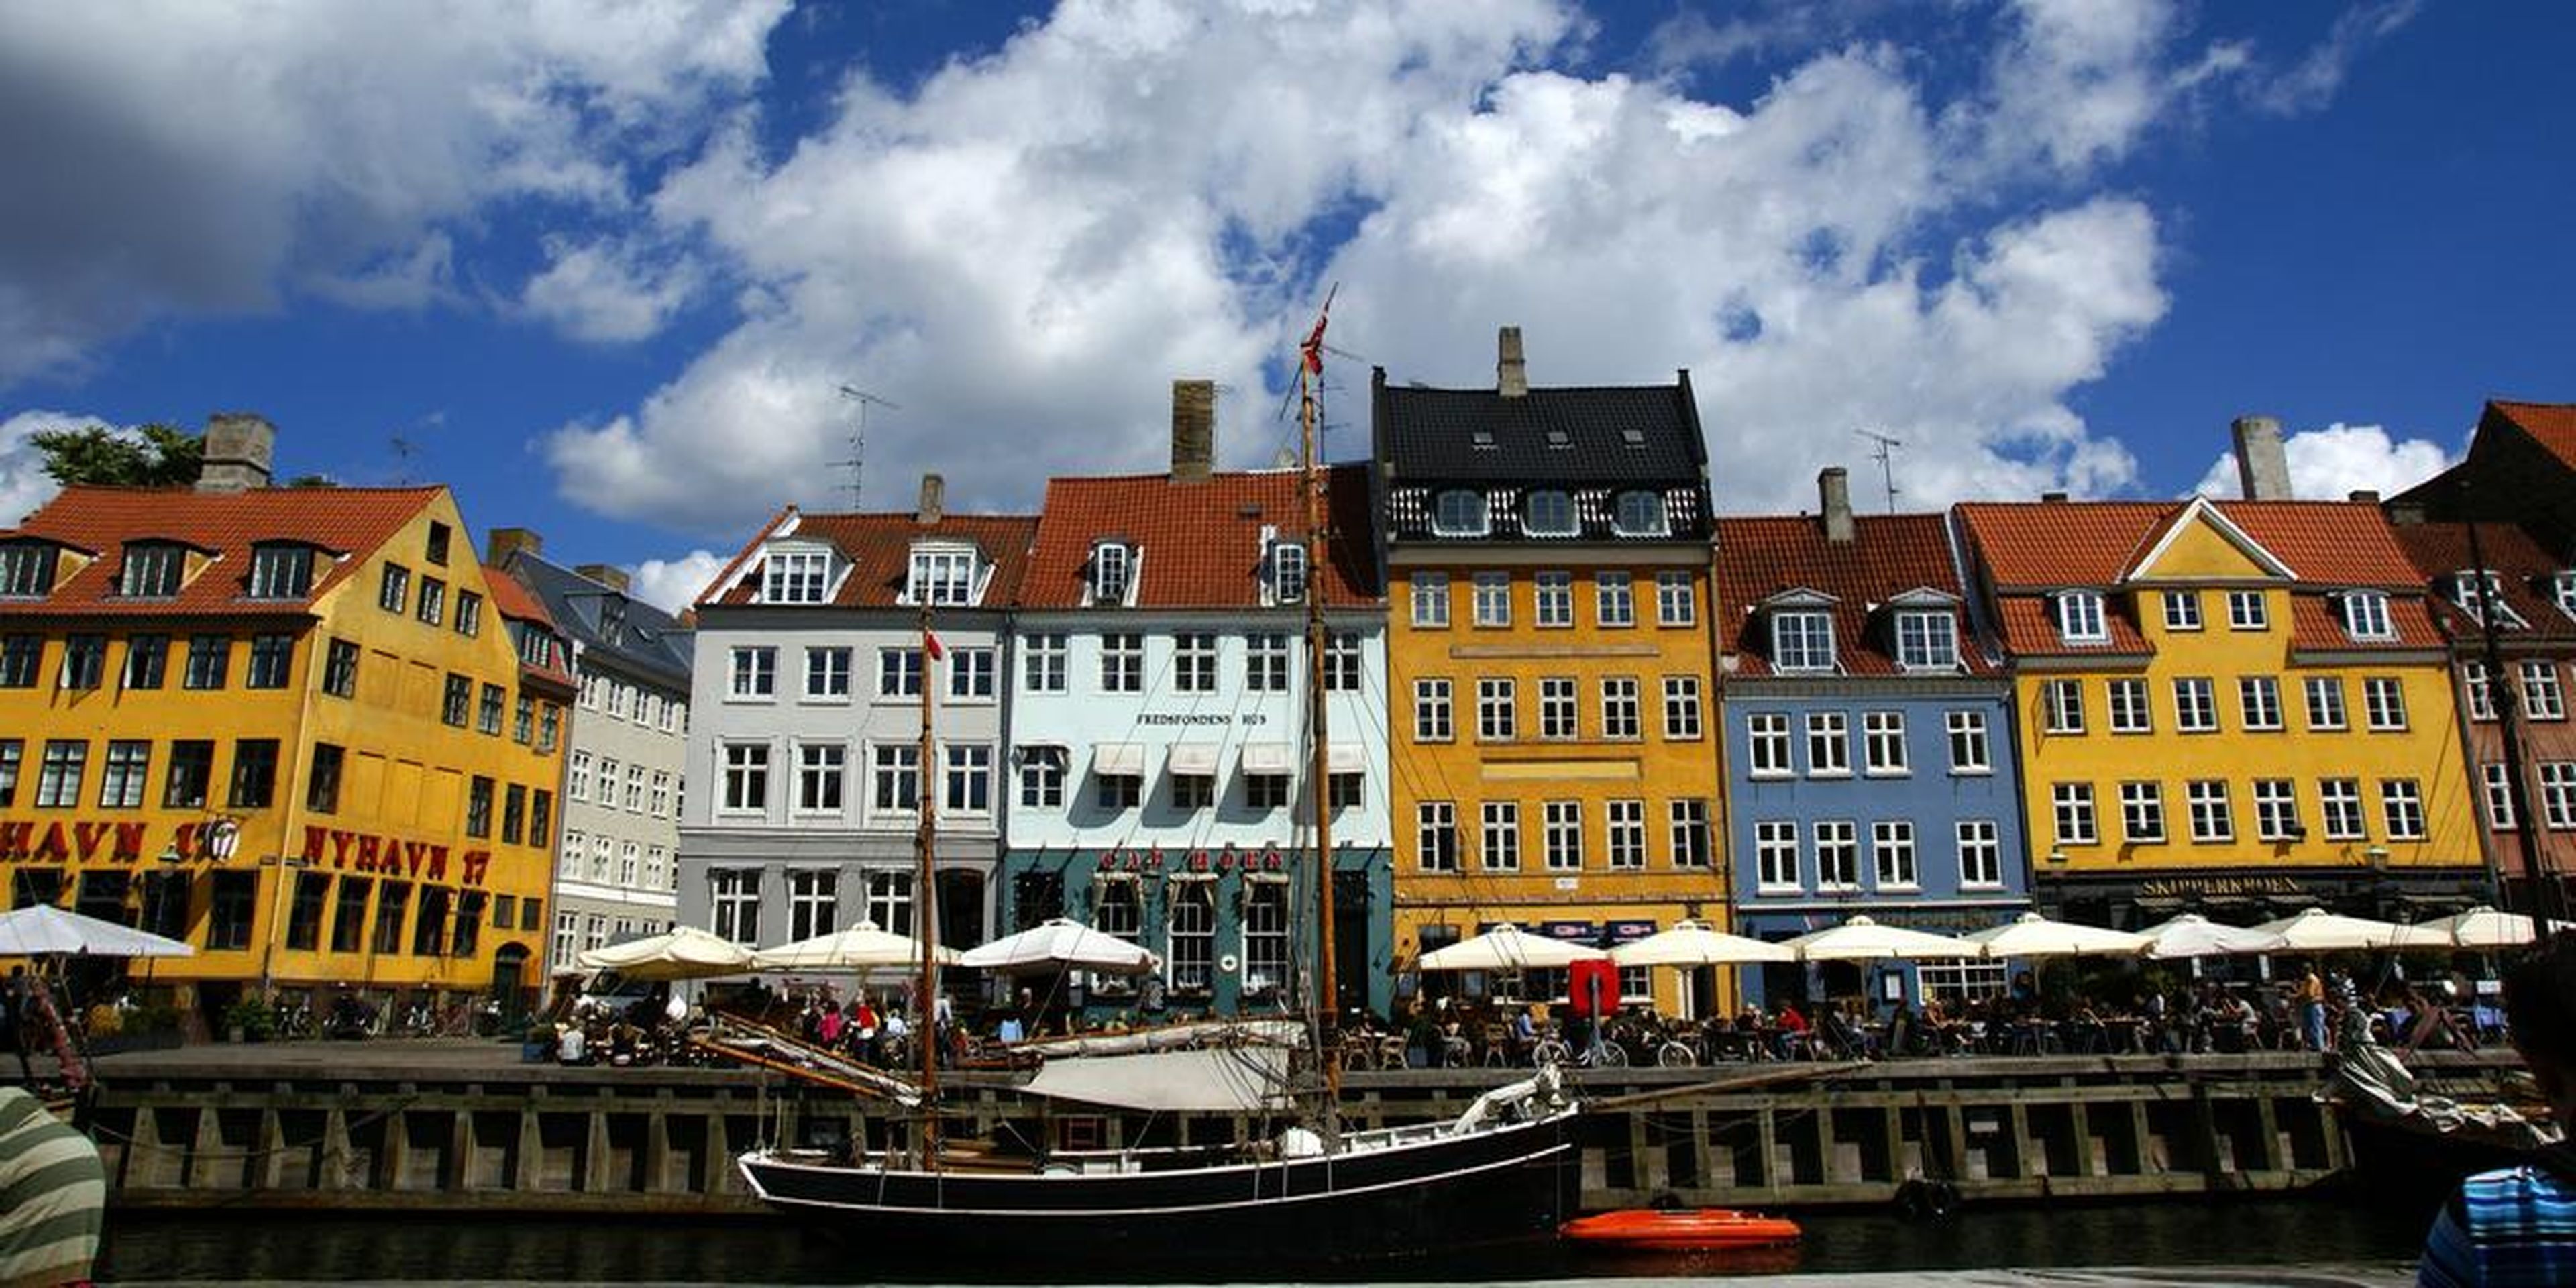 The Nyhavn district of Denmark's capital city, Copenhagen.